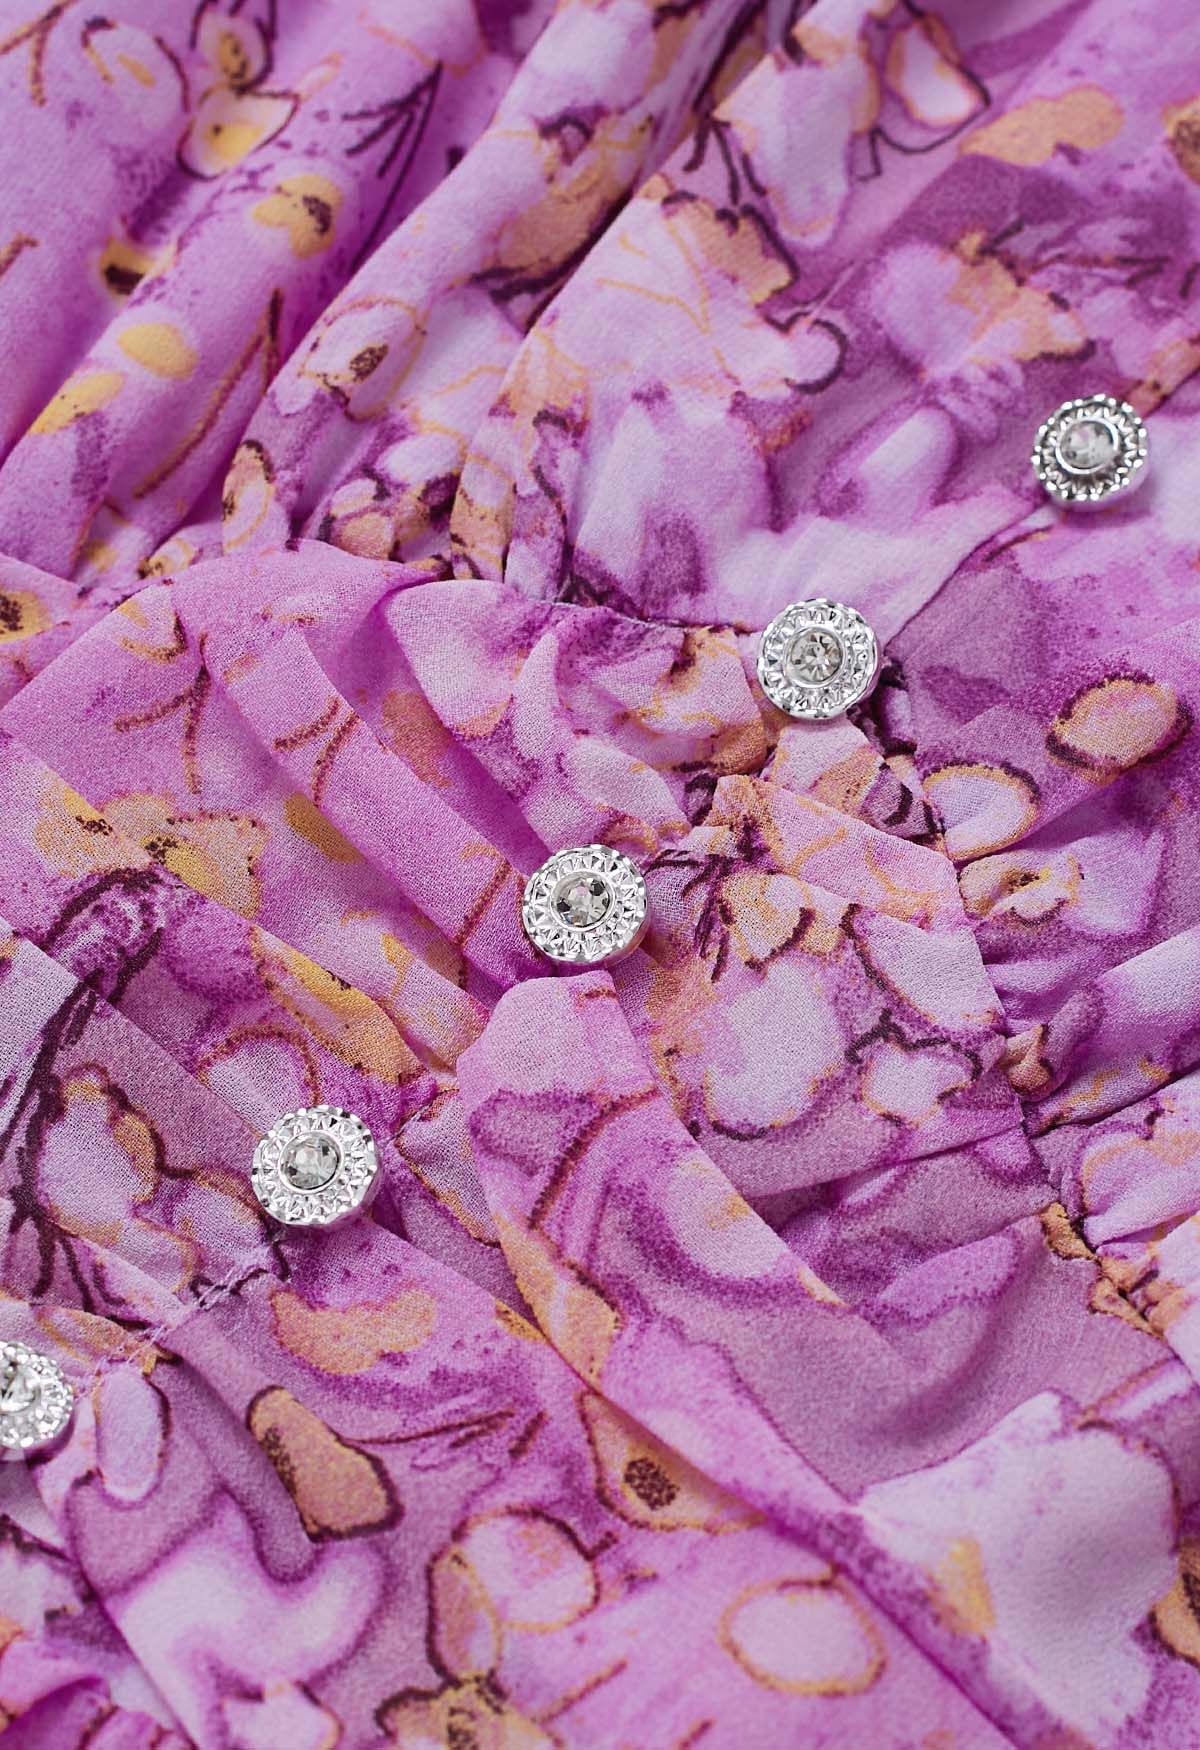 Dainty Floret Print Ruffle Chiffon Maxi Dress in Pink